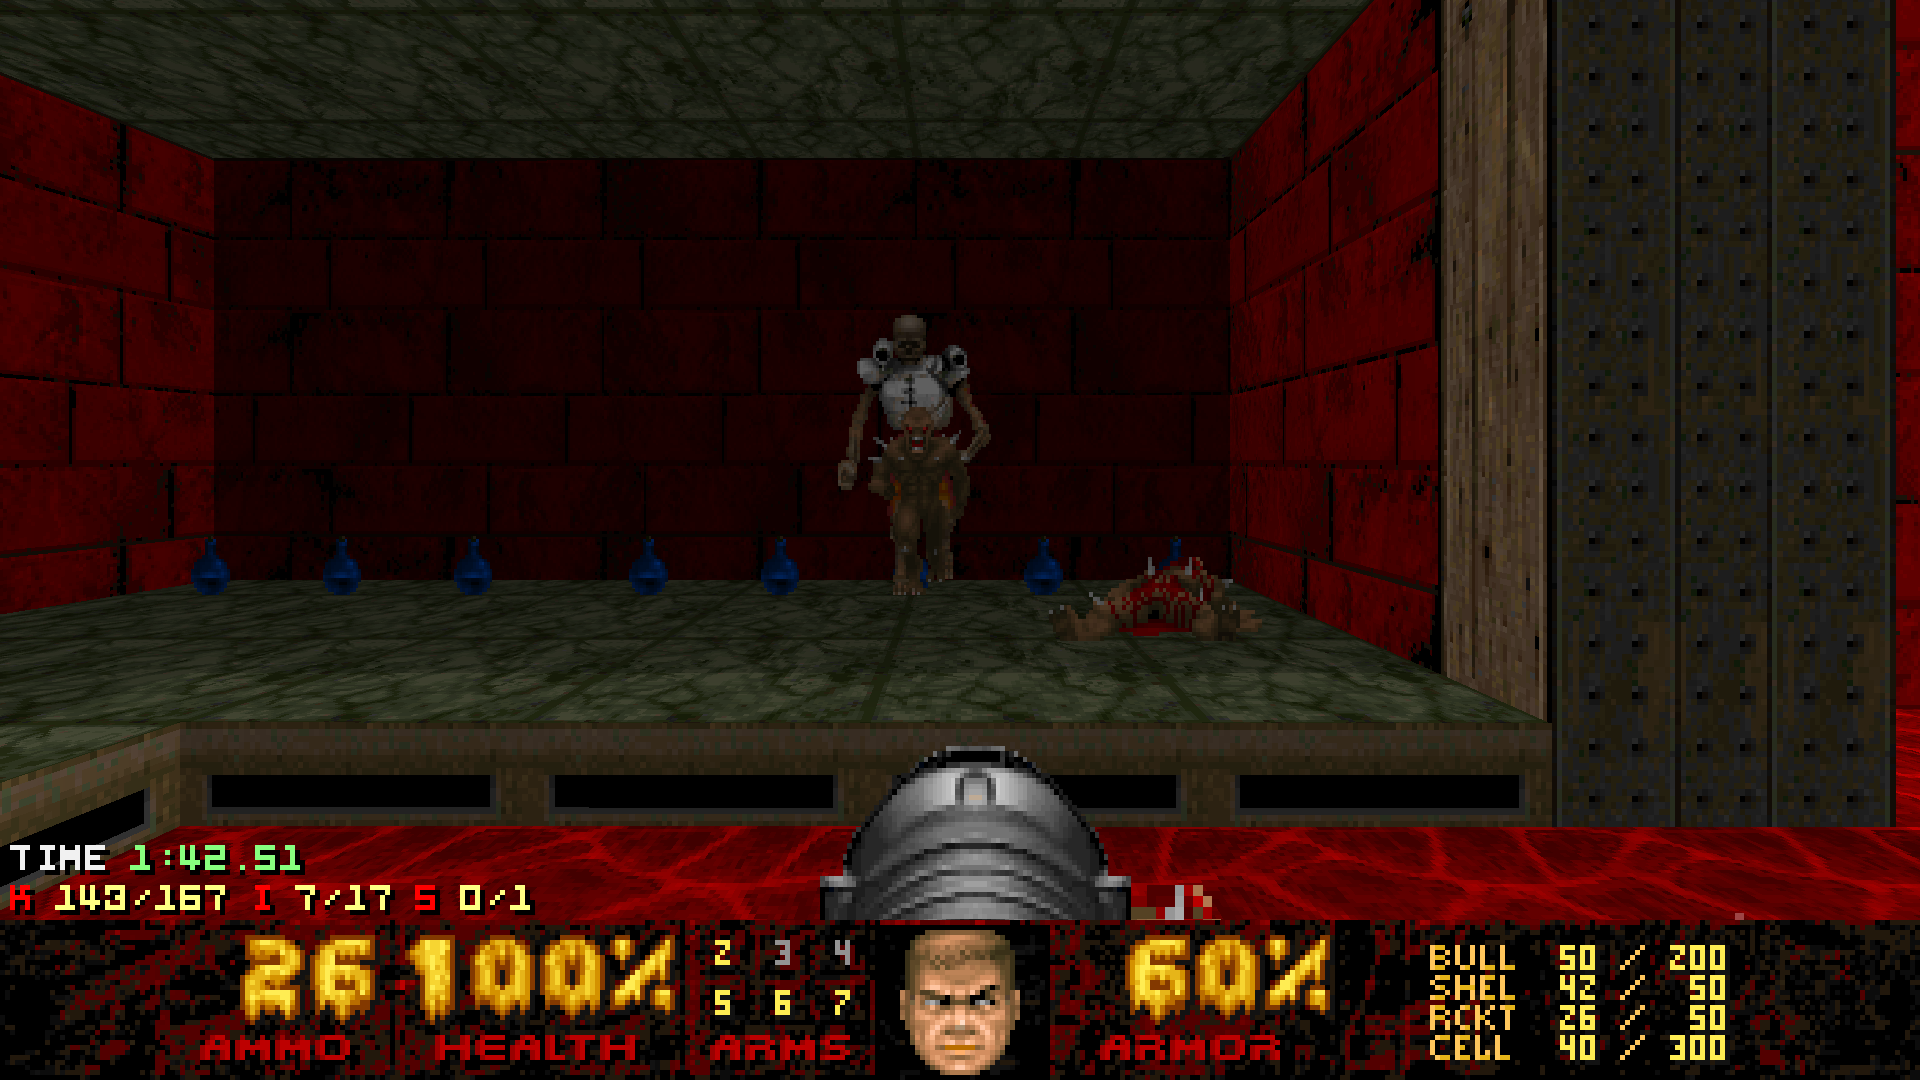 Image 1 - level 188 mod for Doom II - ModDB